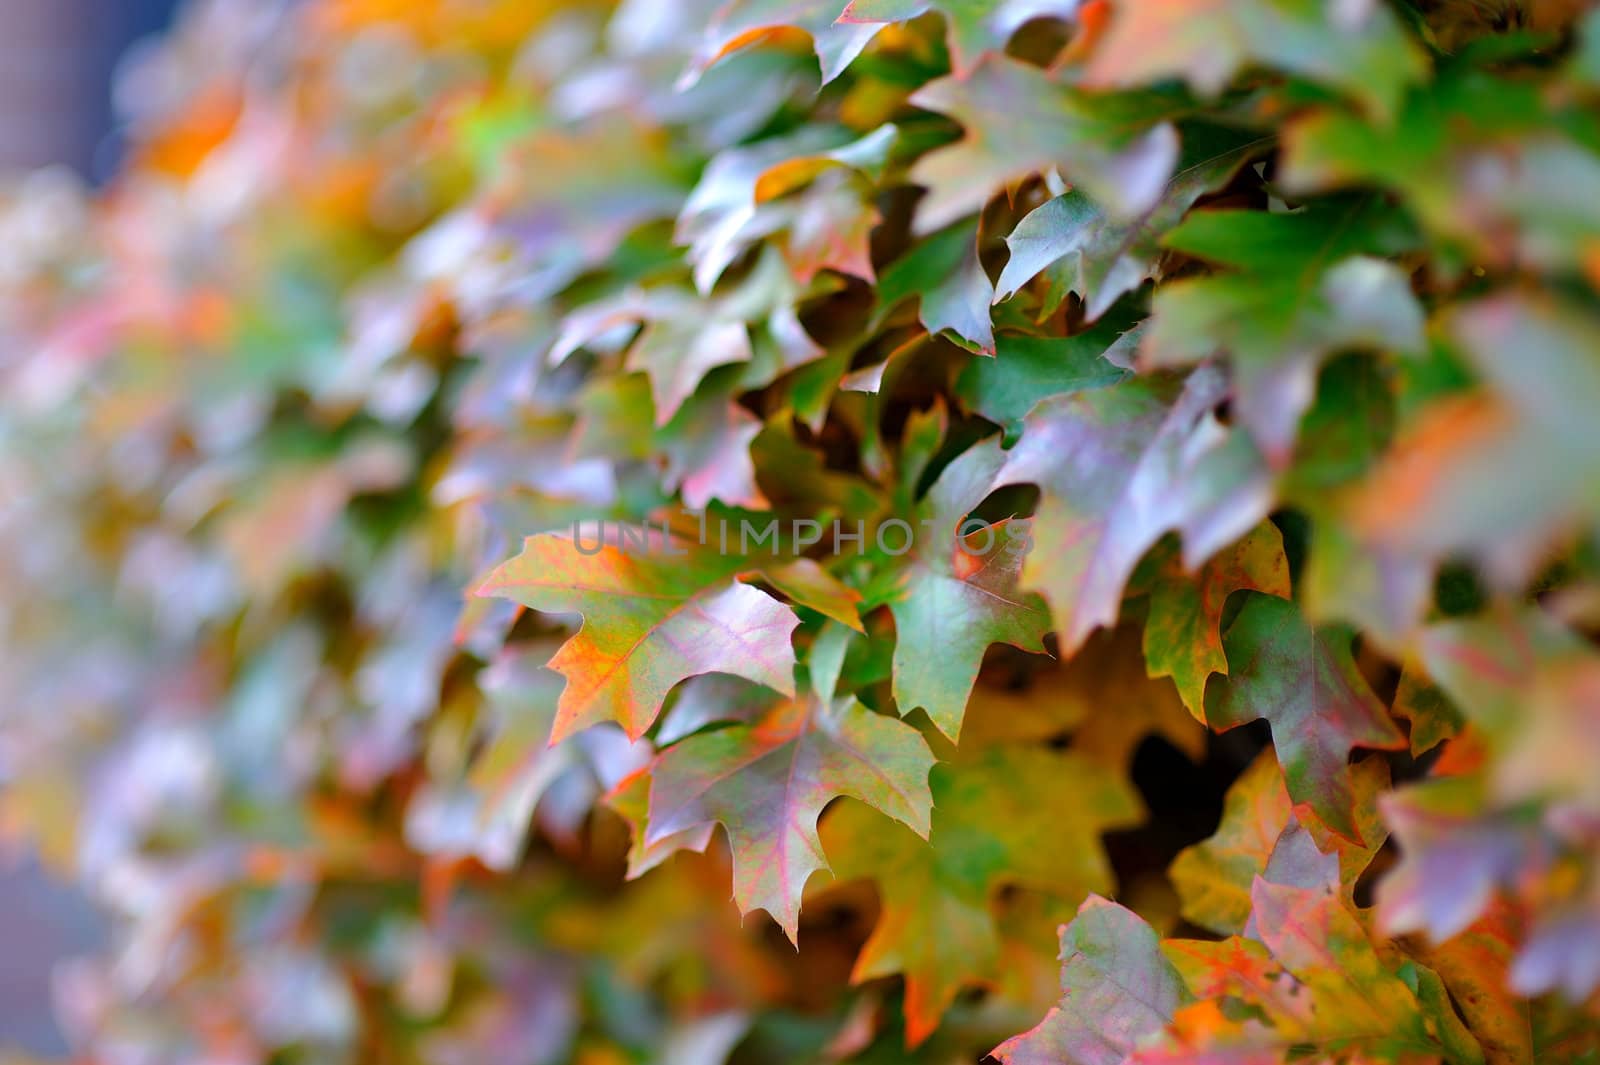 Colorful autumn leaves.